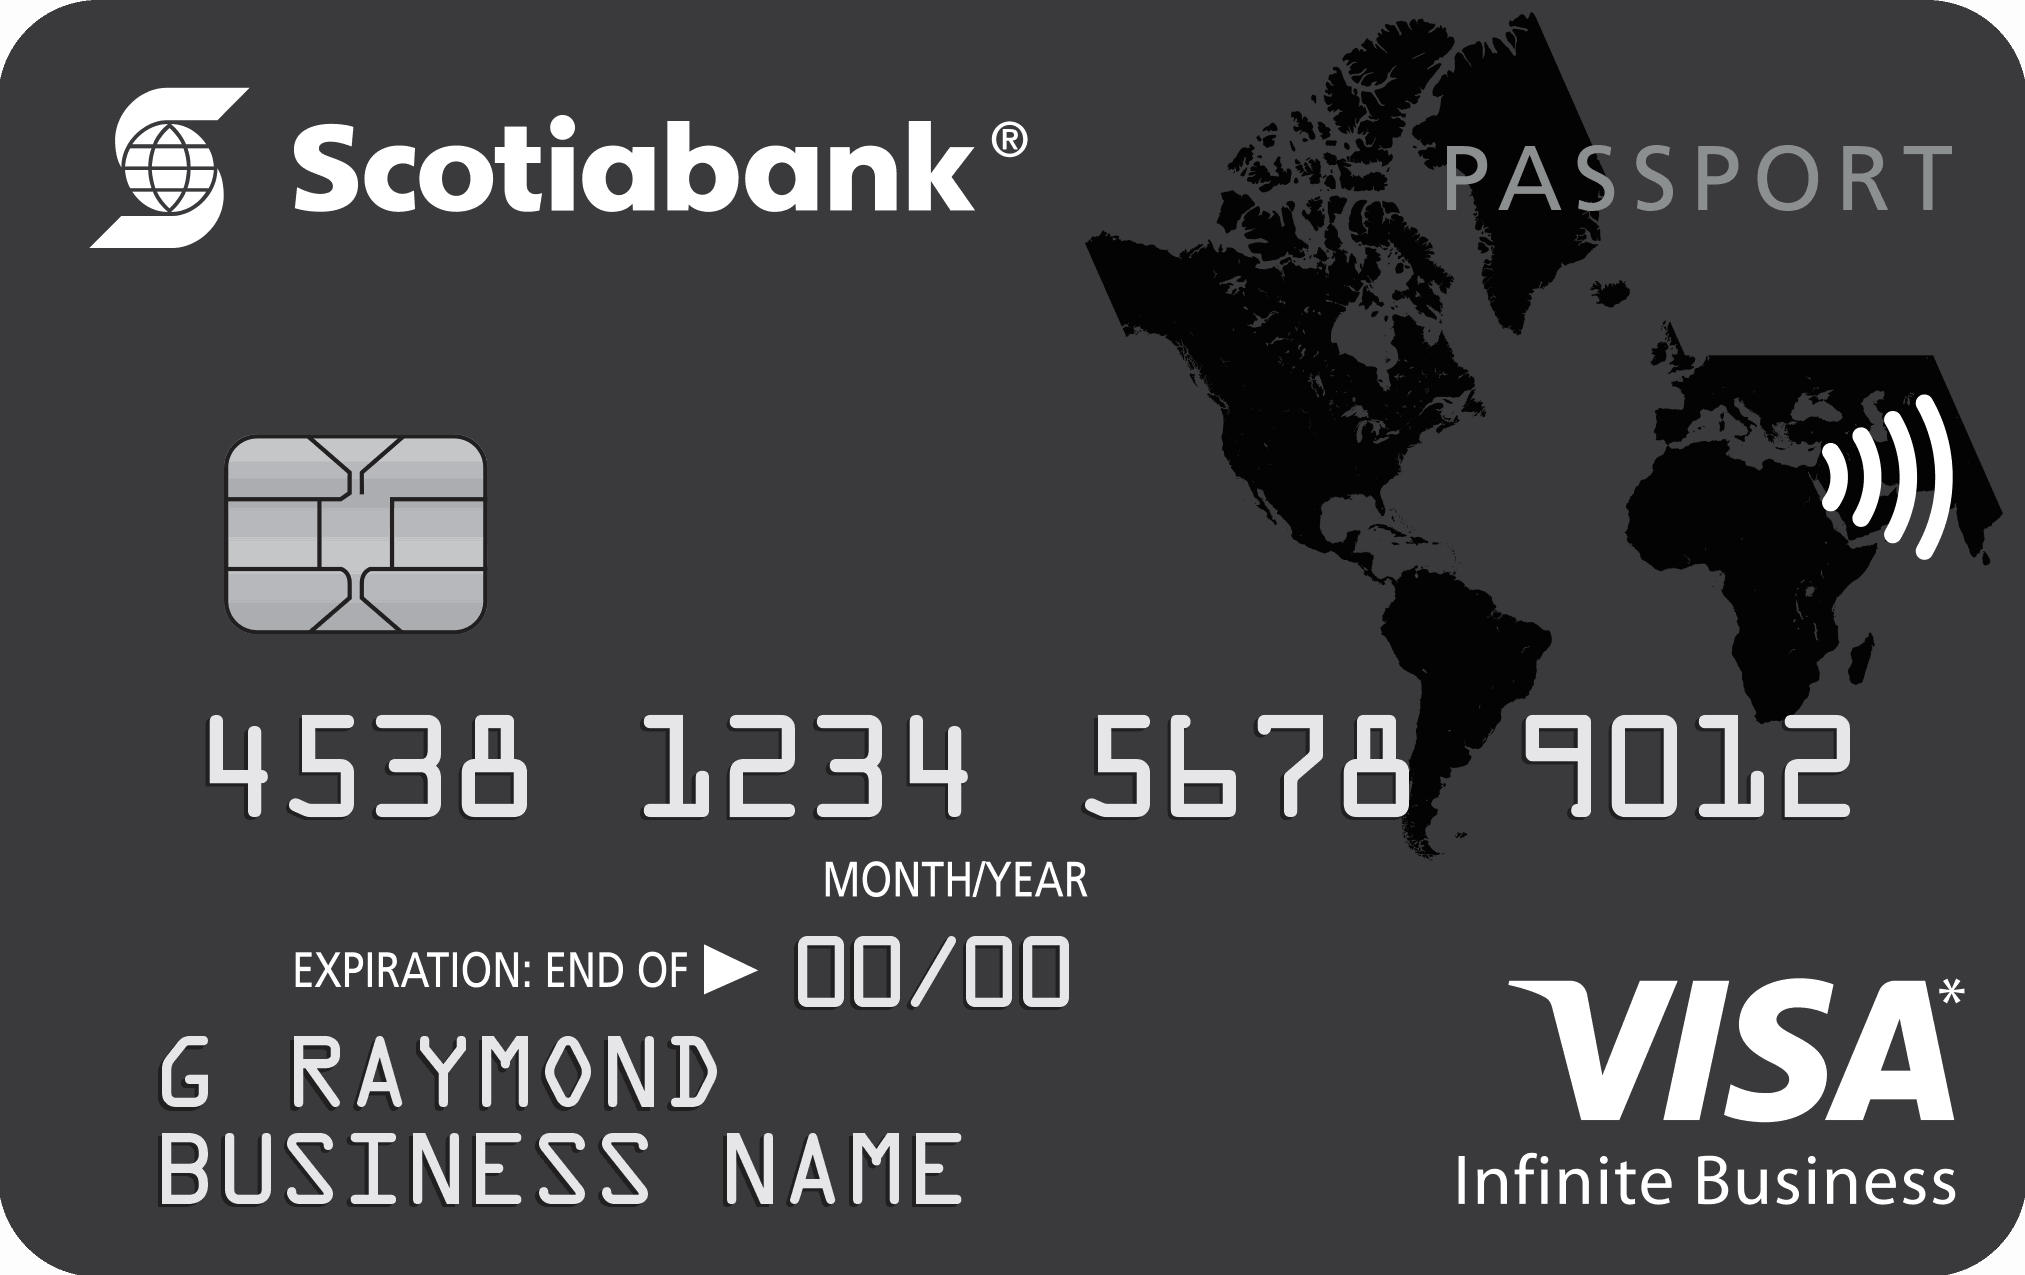 Scotiabank Passport Visa Infinite Business card review